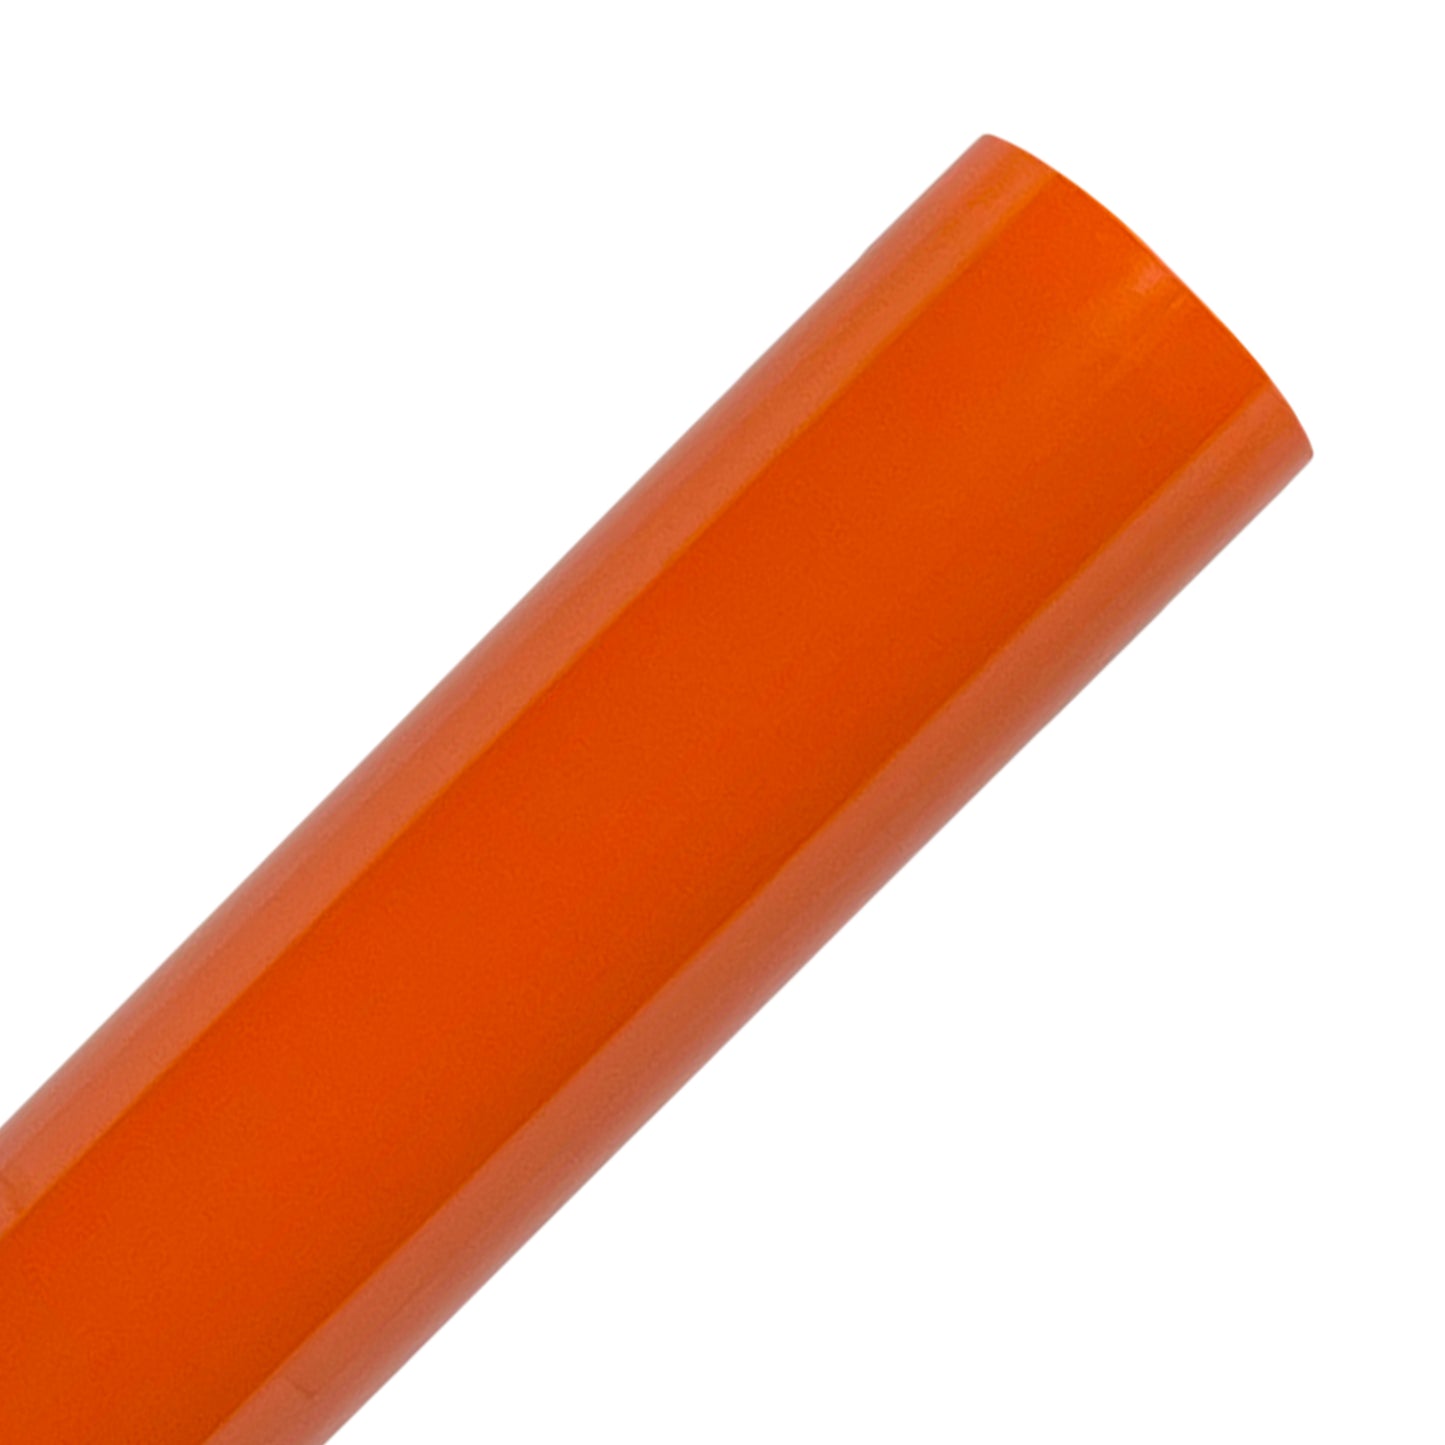 Orange Heat Transfer Vinyl Rolls By Craftables